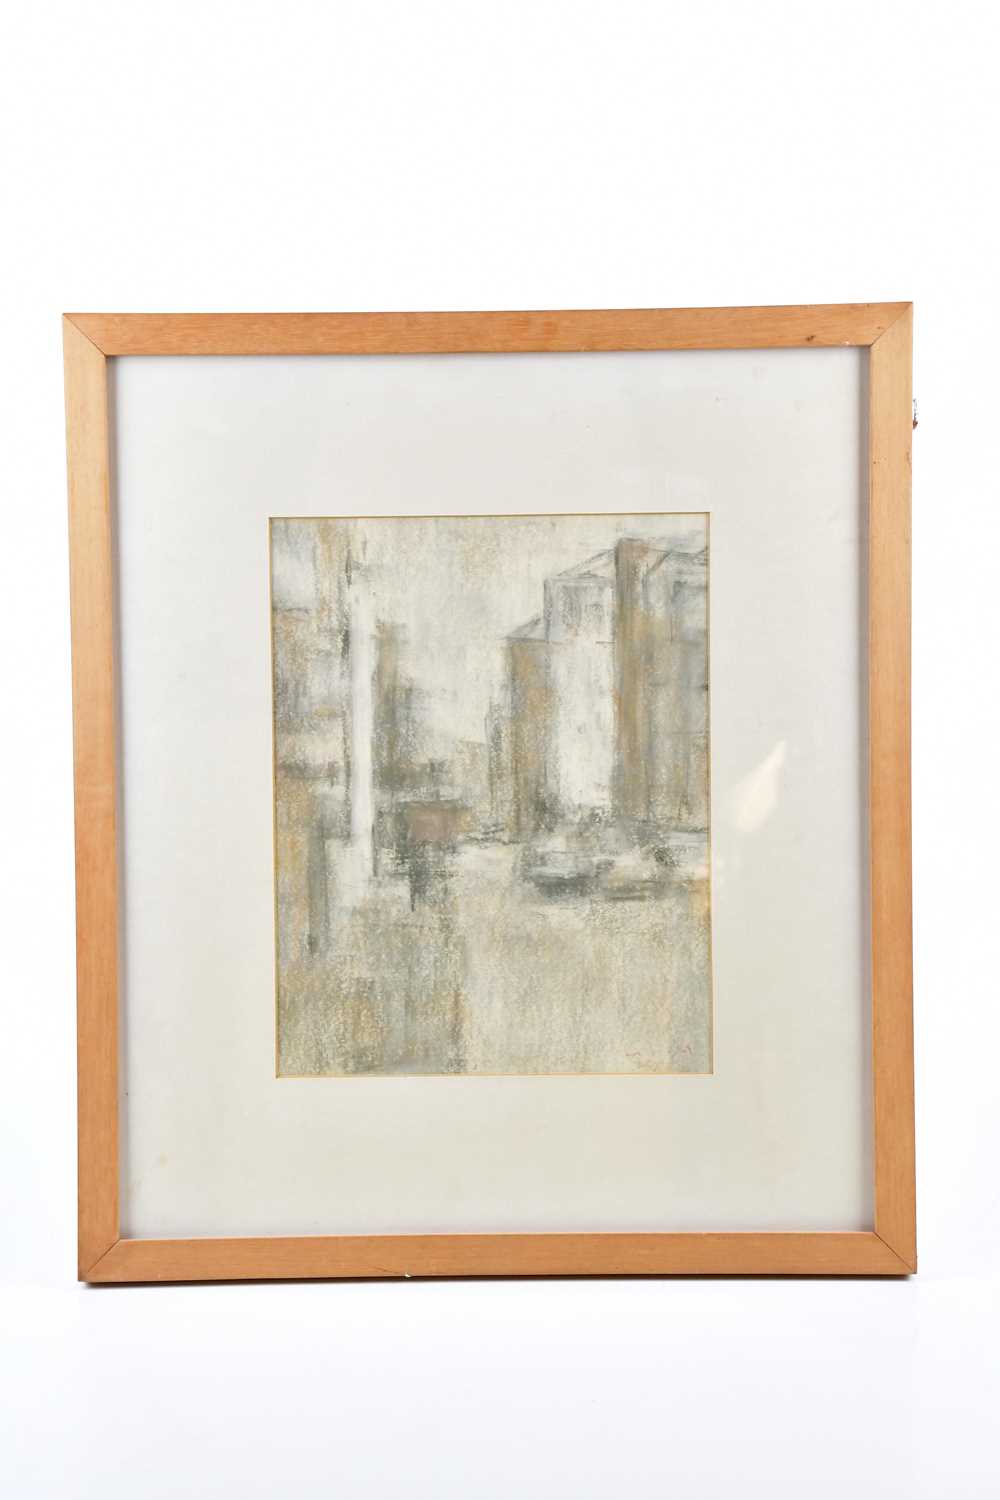 † IAN WOOD; pastel, 'John Dalton Street', indistinctly signed and dated 07, 29.5 x 23cm, framed